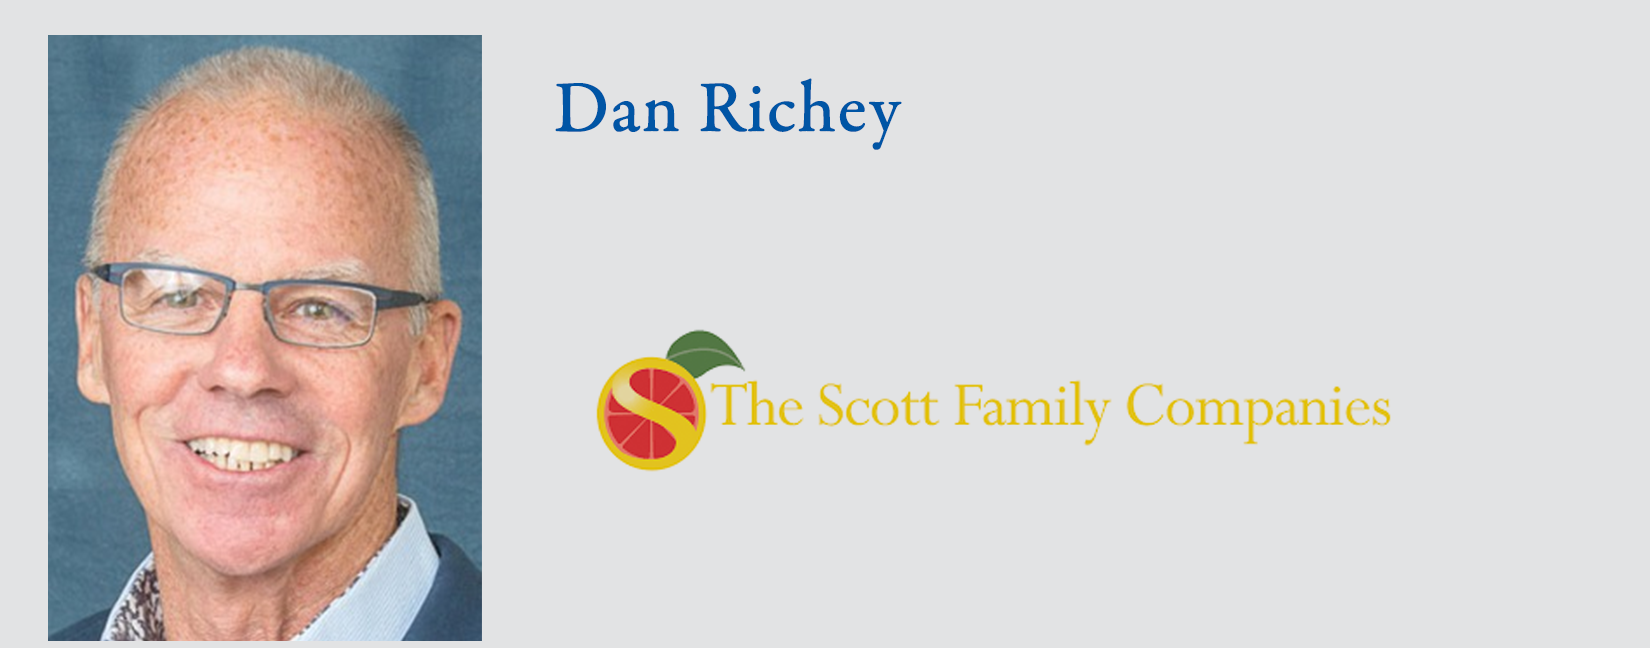 Dan Richey